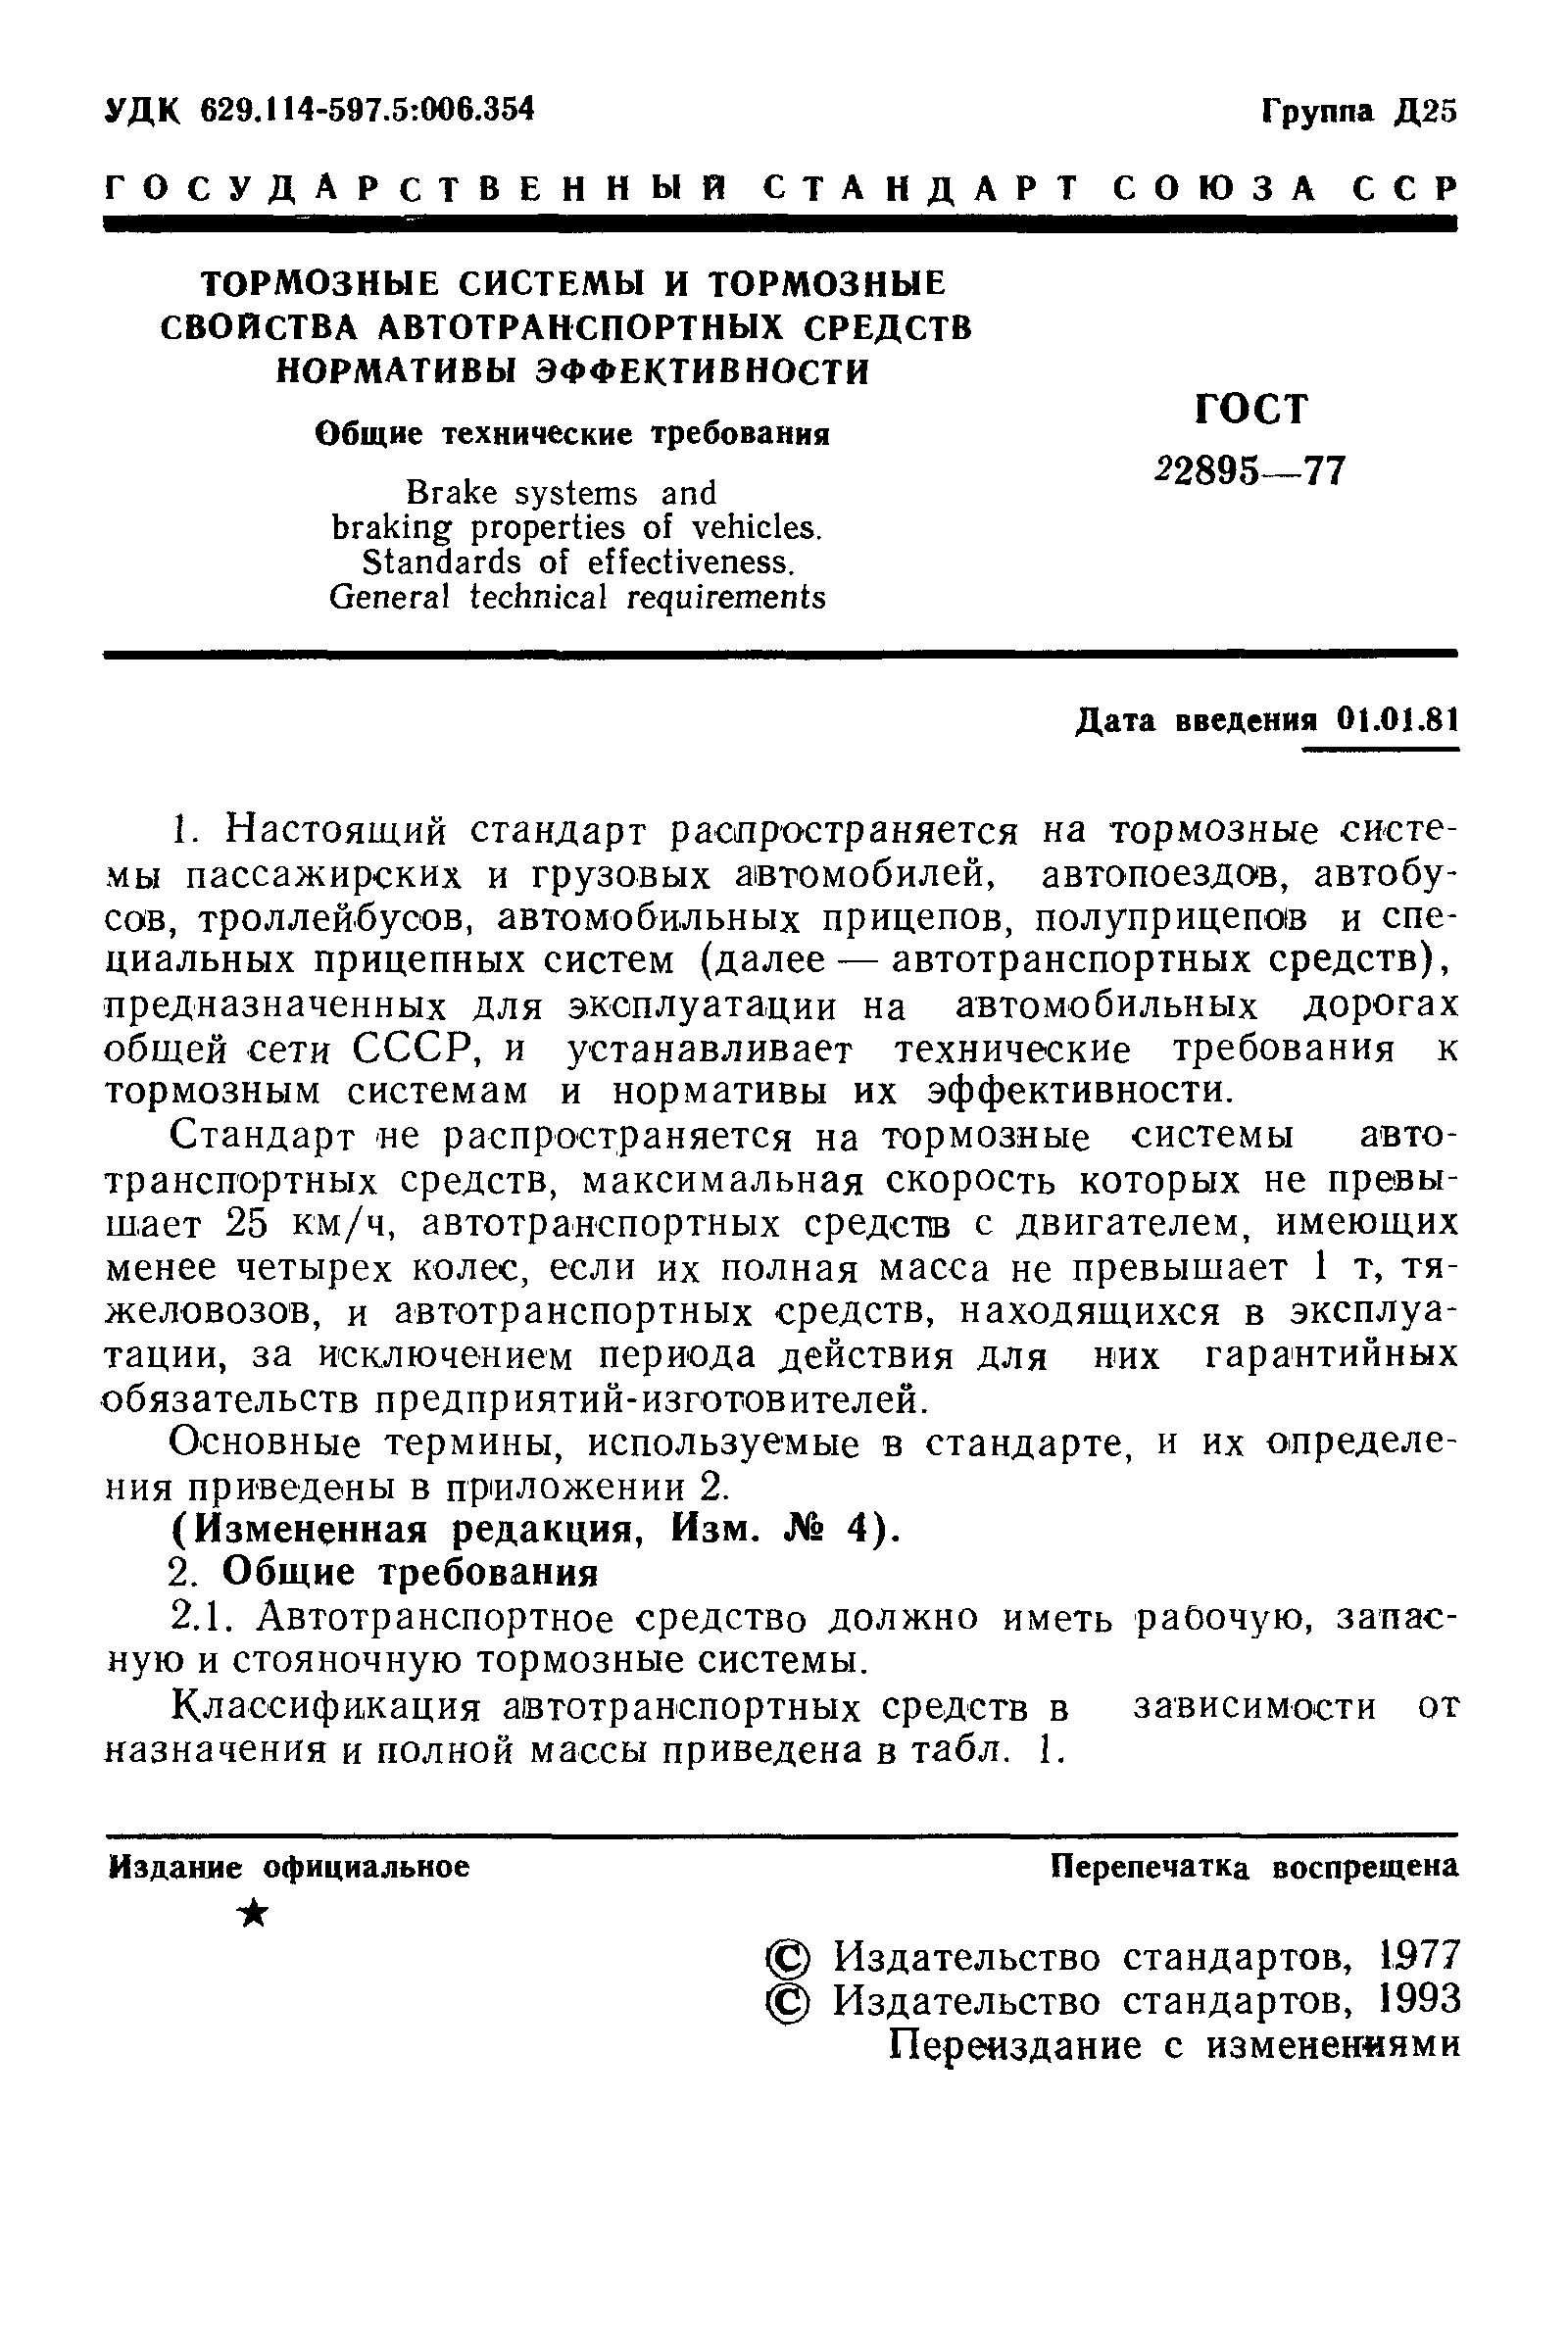 ГОСТ 22895-77